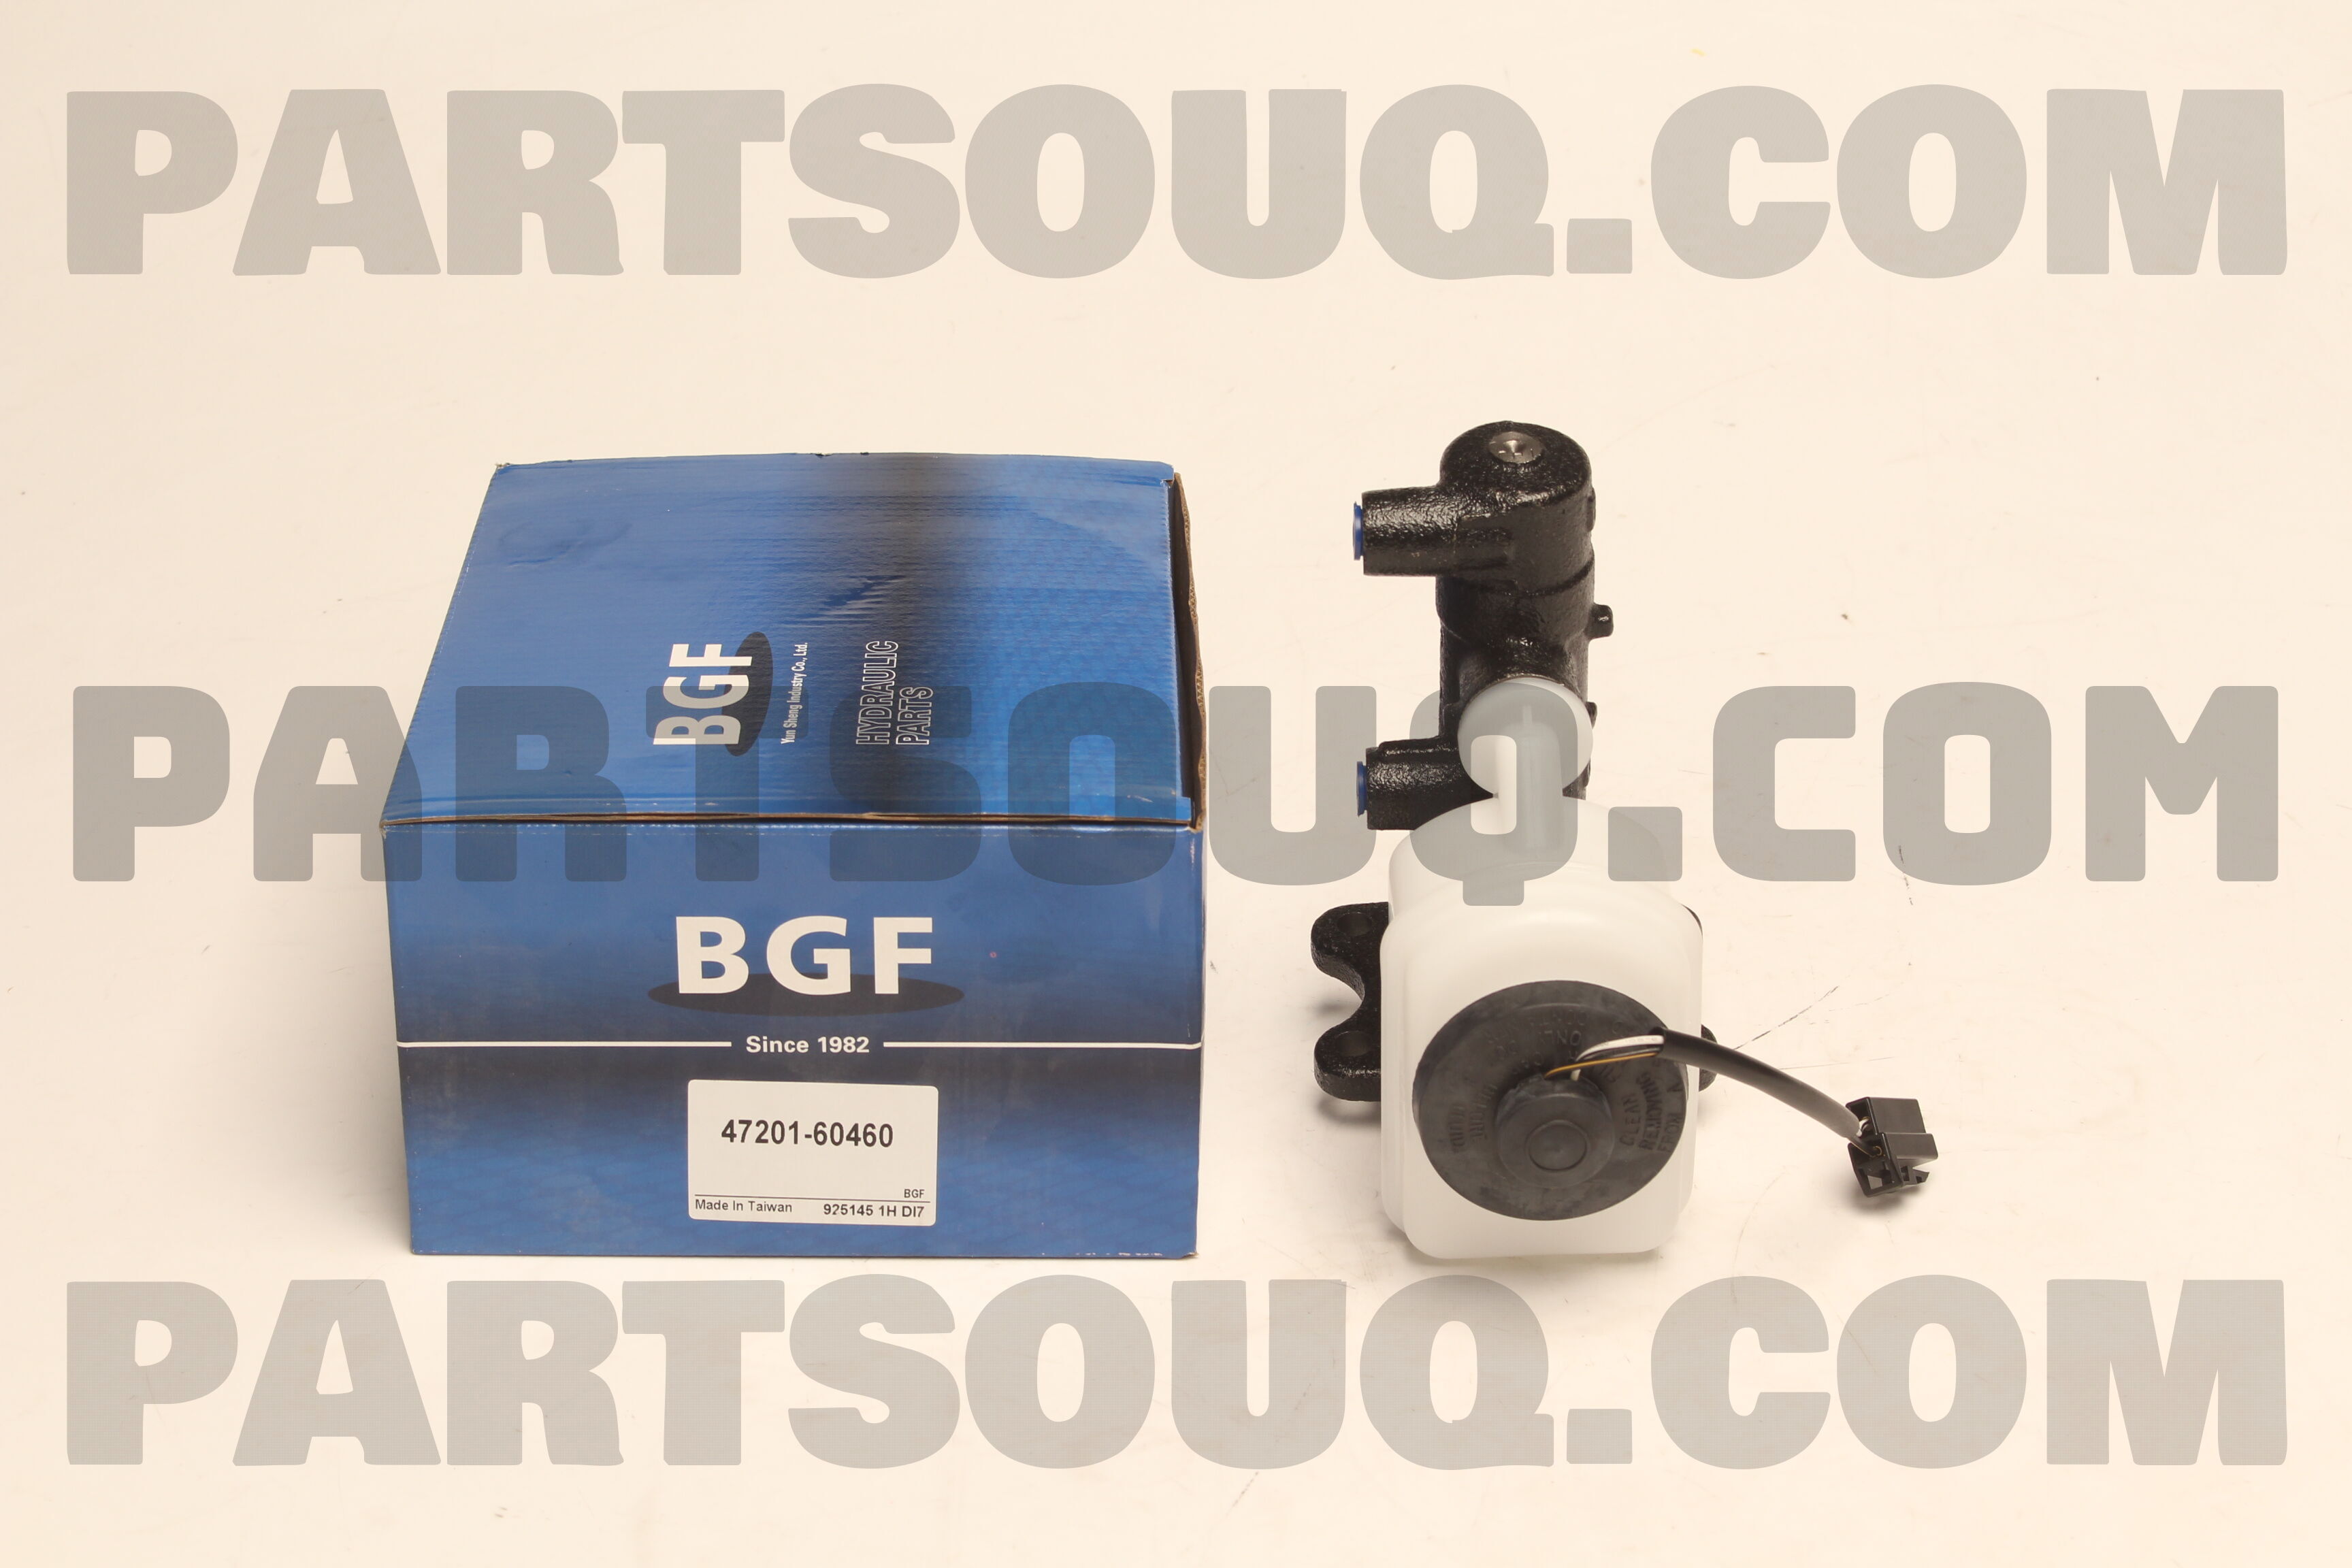 BMC ASSY 4720160460 | BGF Parts | PartSouq